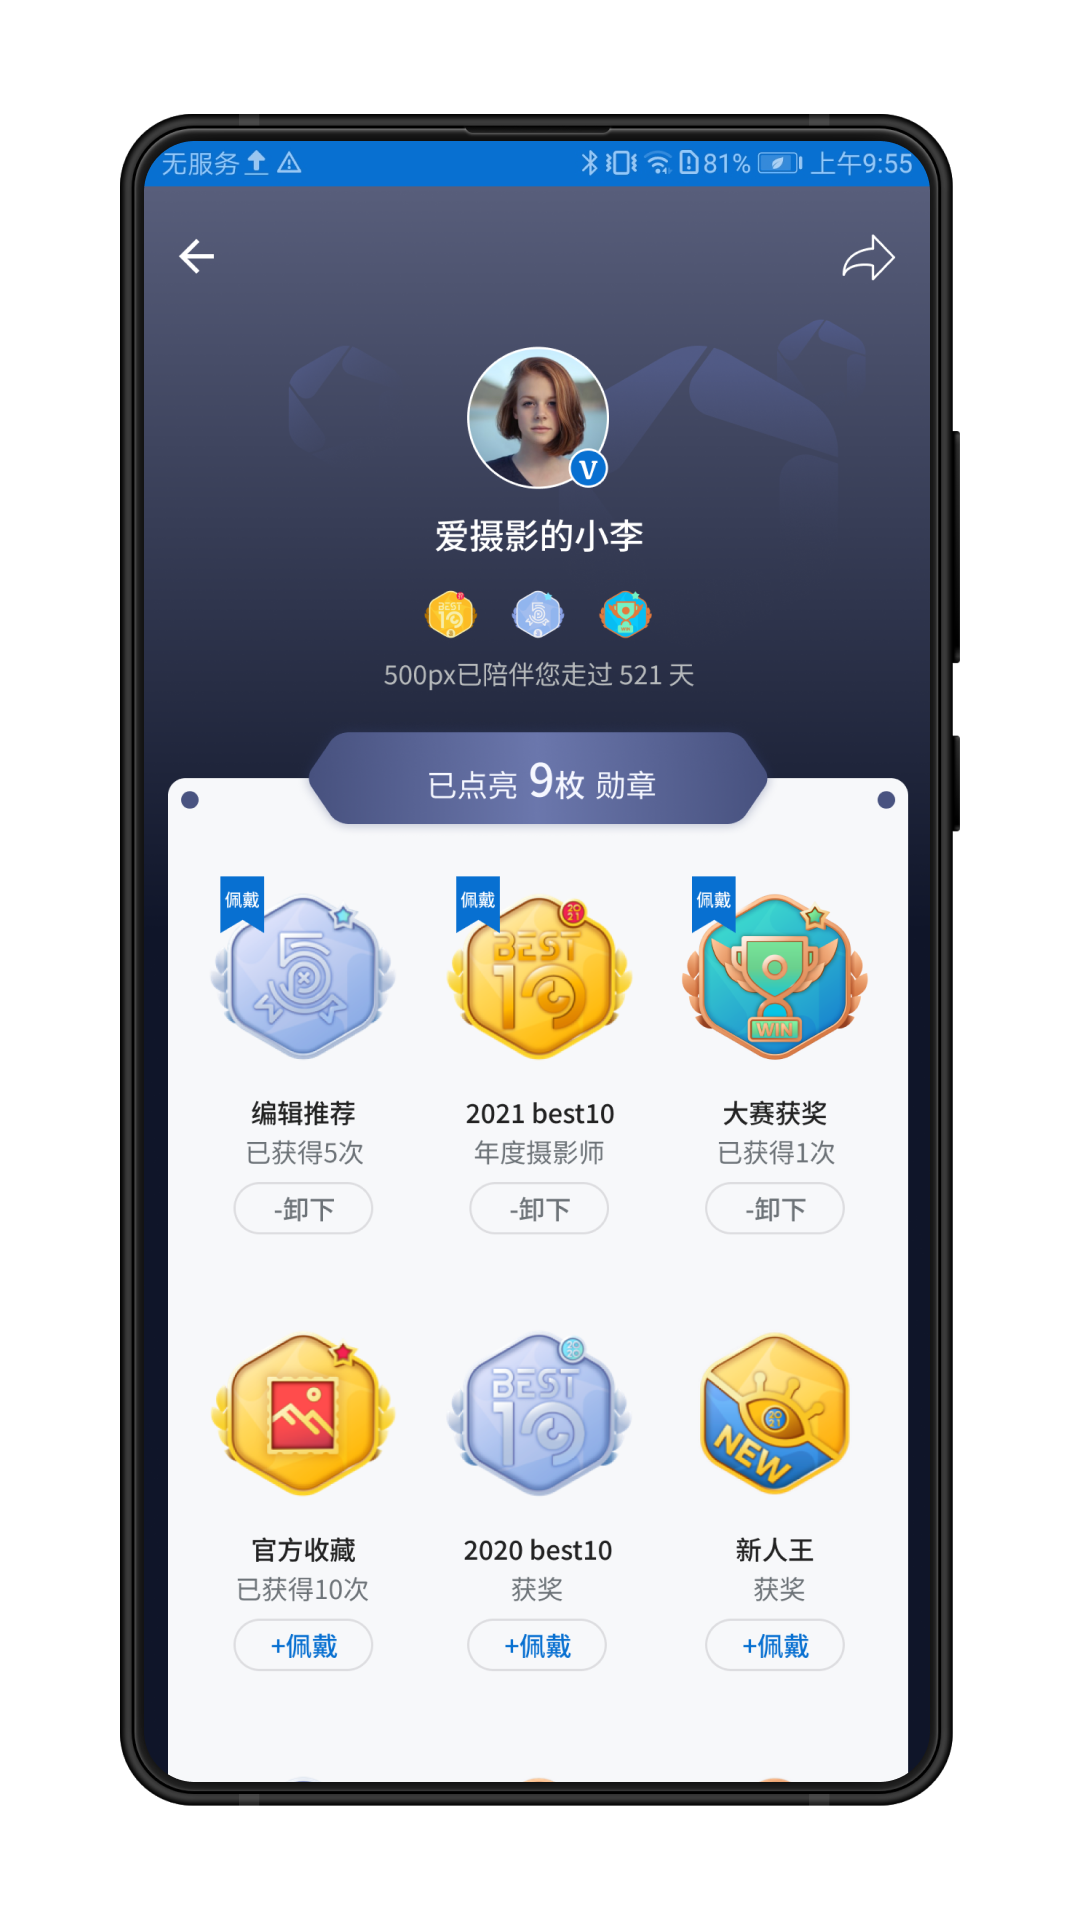 500px中国版app最新版下载